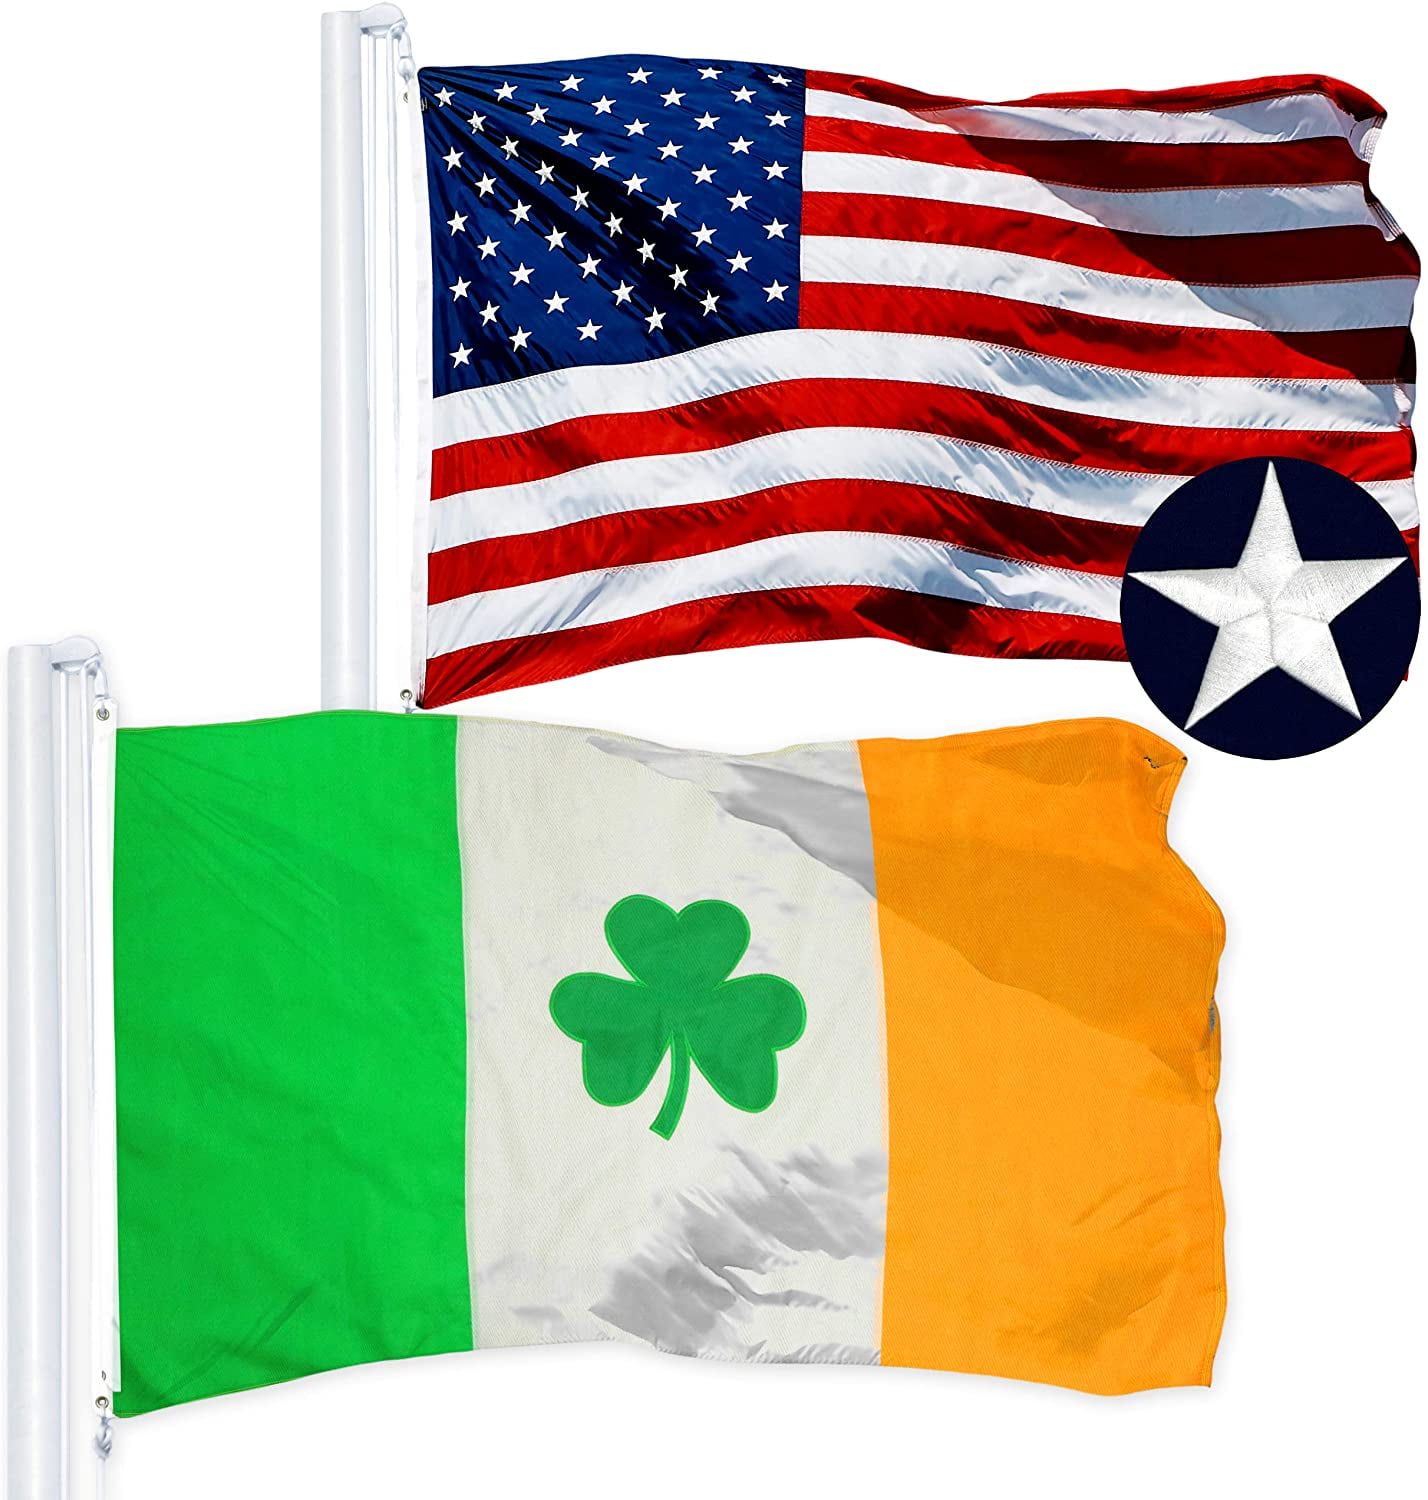 NEW 3x5 ft IRELAND IRISH INDOOR OUTDOOR FLAG better quality usa seller 